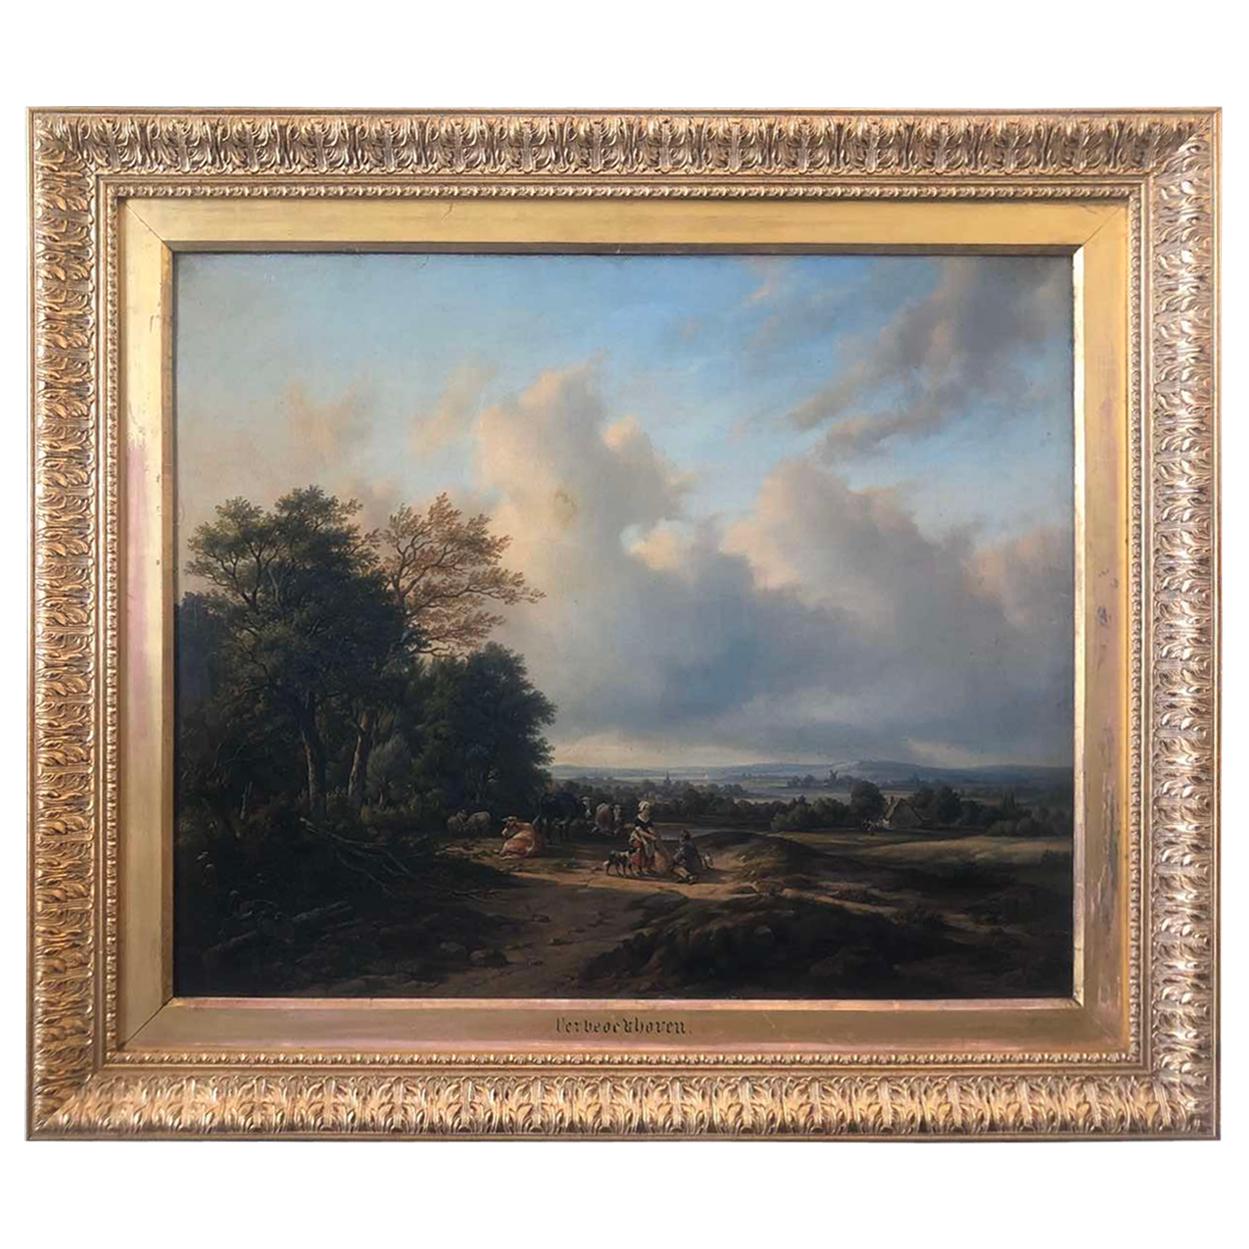 Verboeckhoven, Masterpiece Oil on Canvas ‘Landscape’, circa 1820